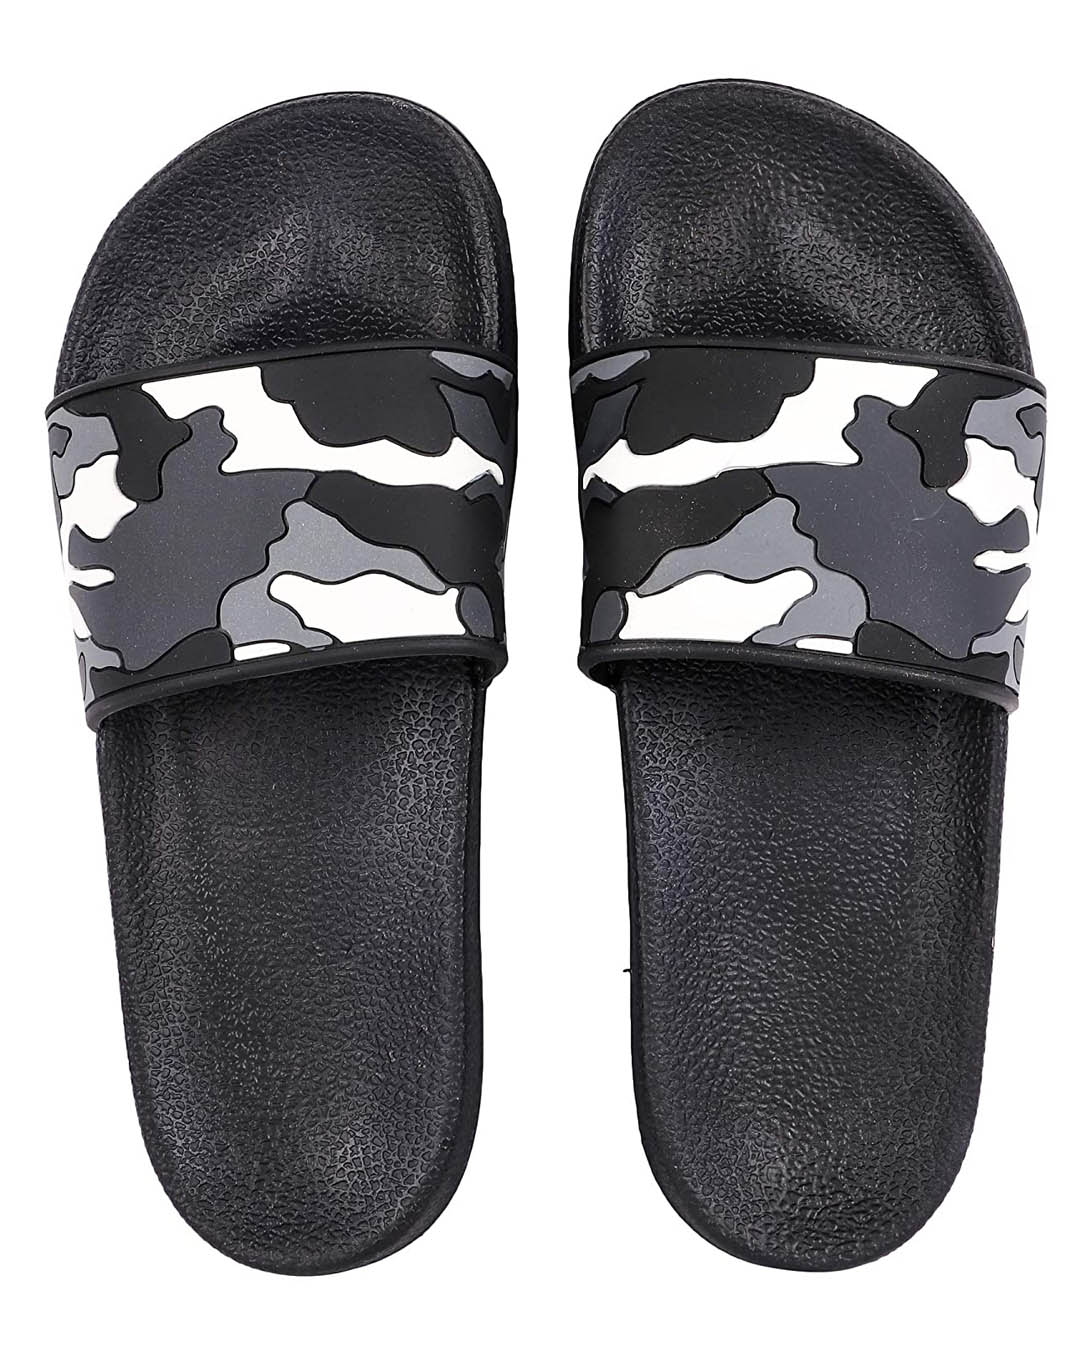 Buy Men's Black Military Flip Flops & Sliders Online in India at Bewakoof